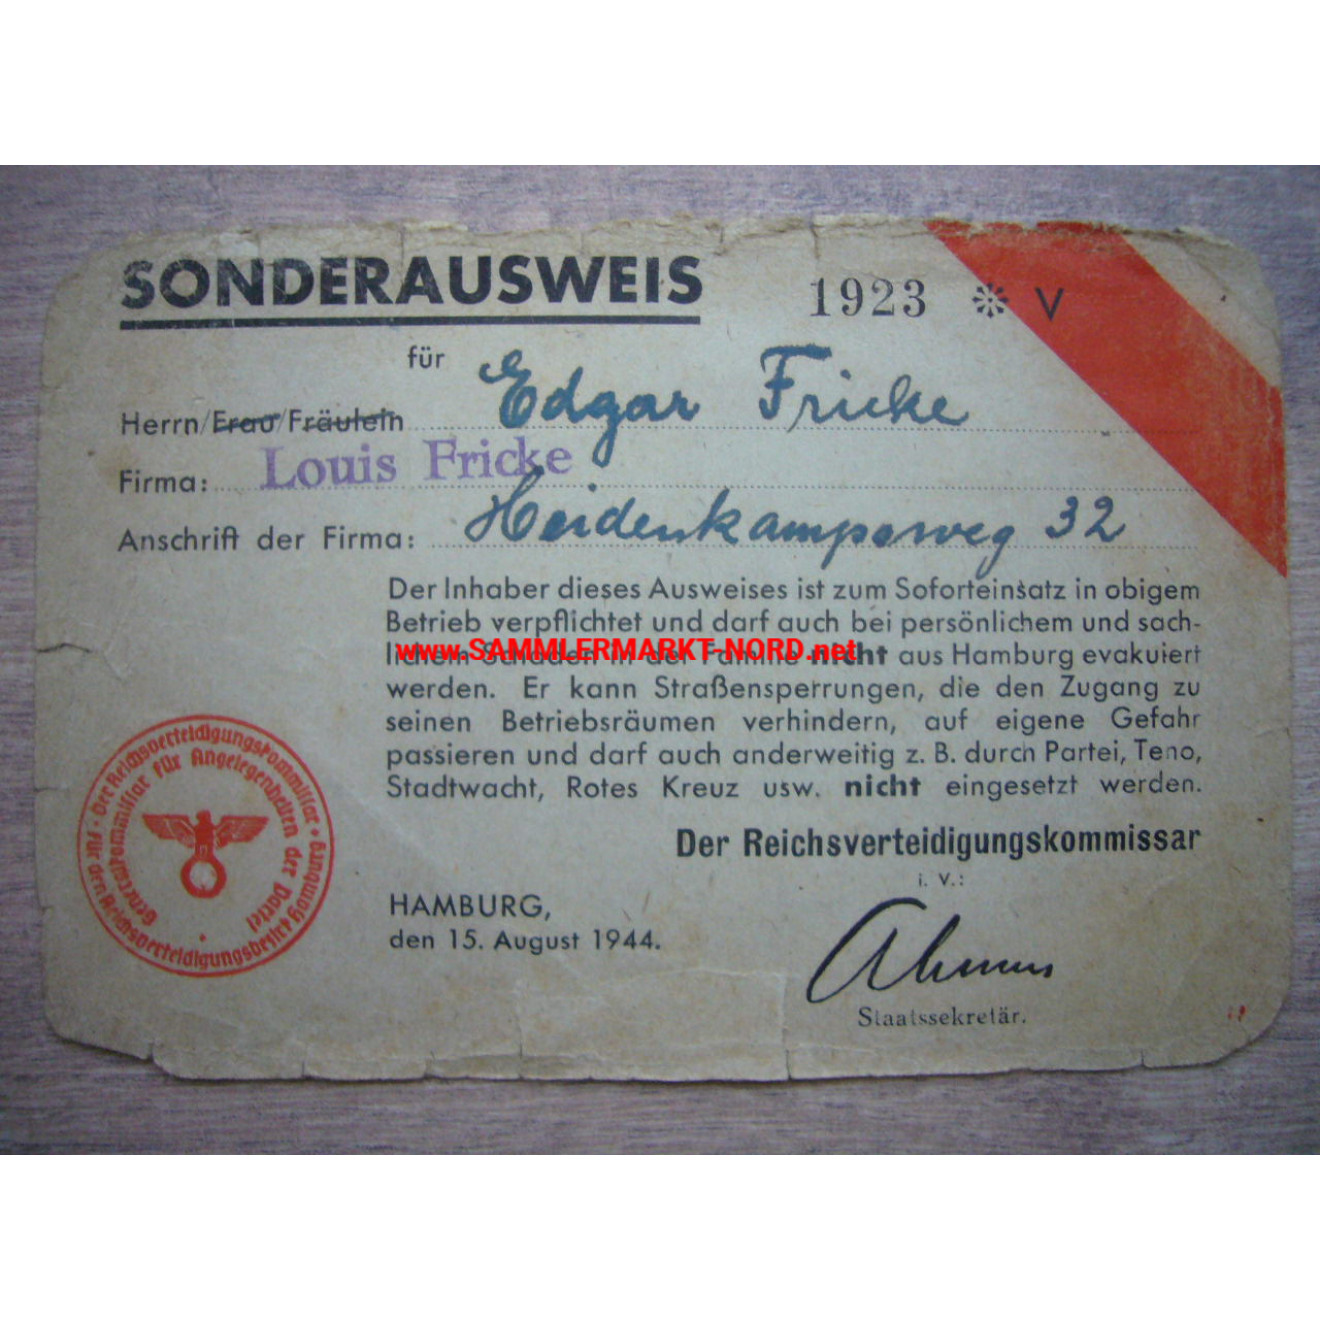 Special ID card - Reich Defense Commissioner - Hamburg 1944